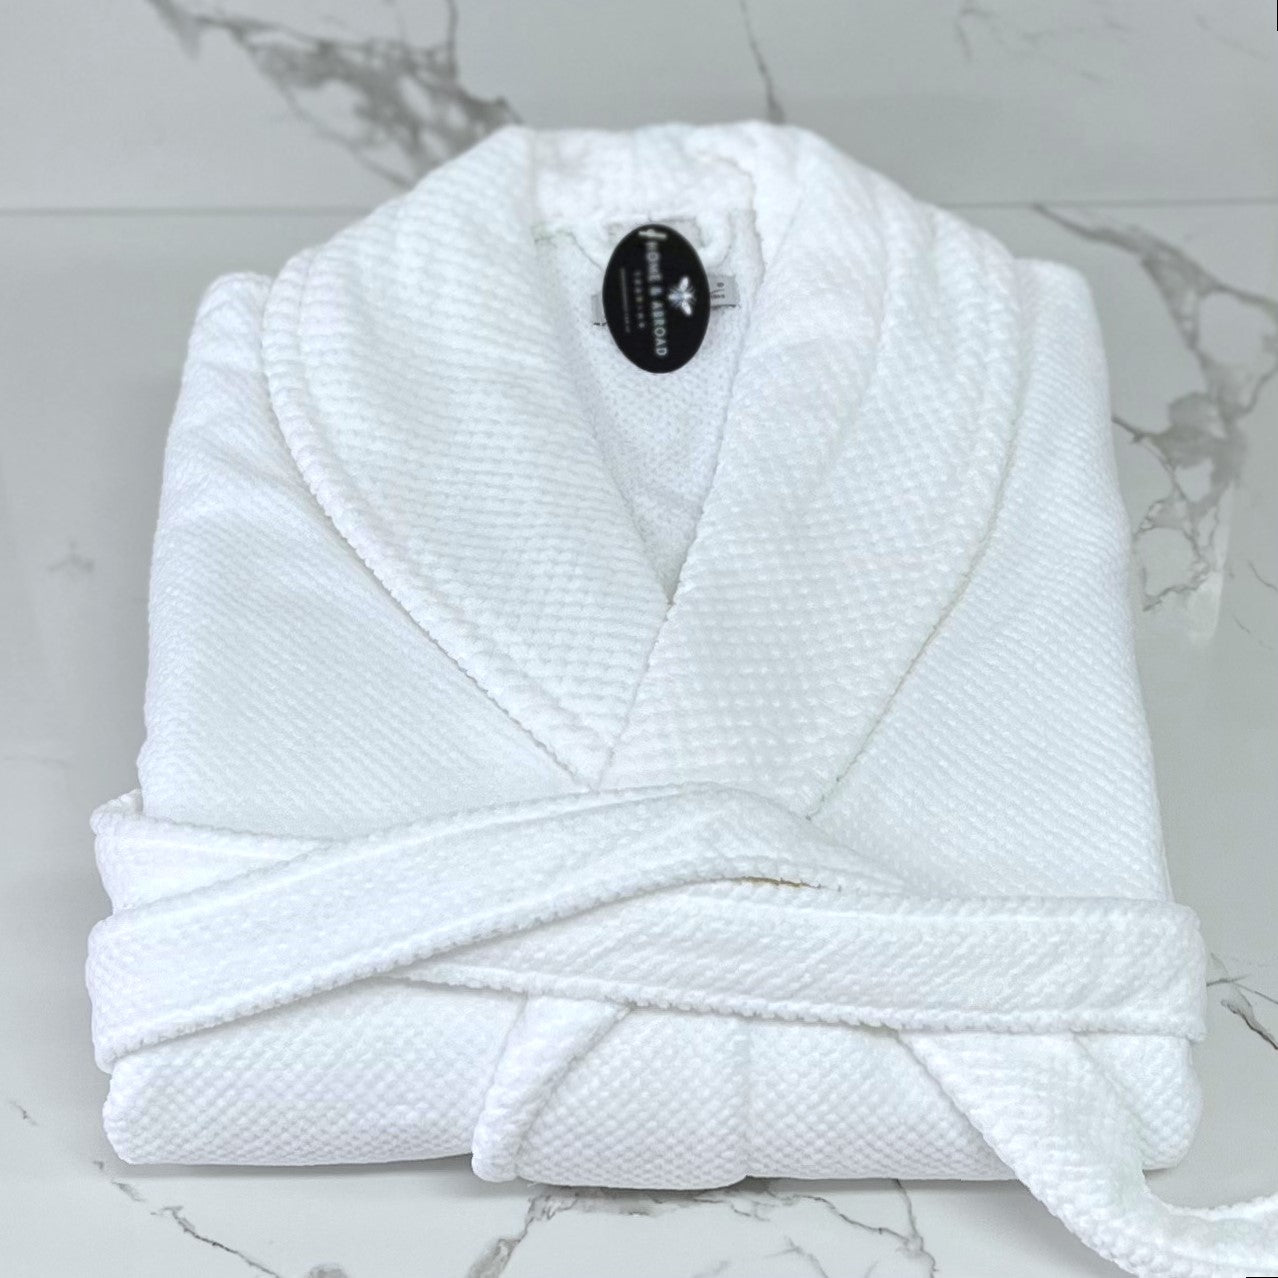 Spa Range White Bath Robe Large